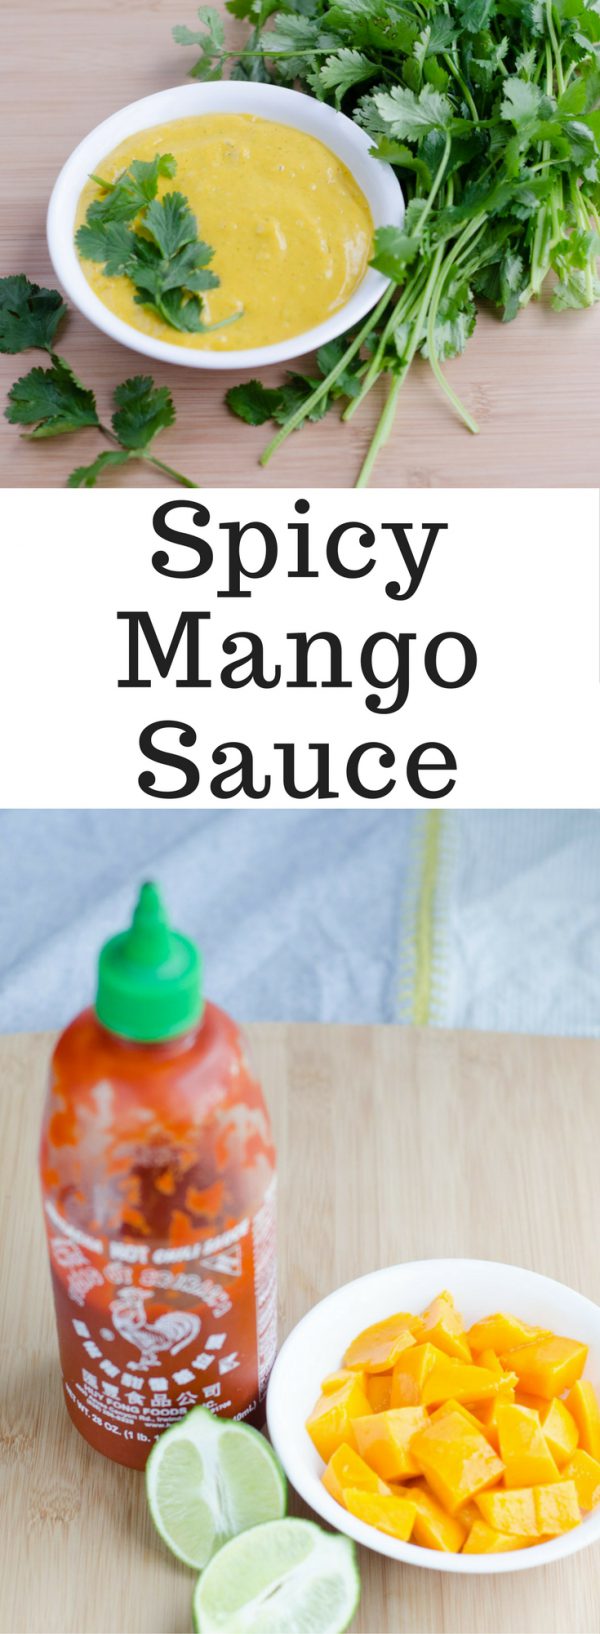 Spicy Mango Sauce - Hello Fun Seekers